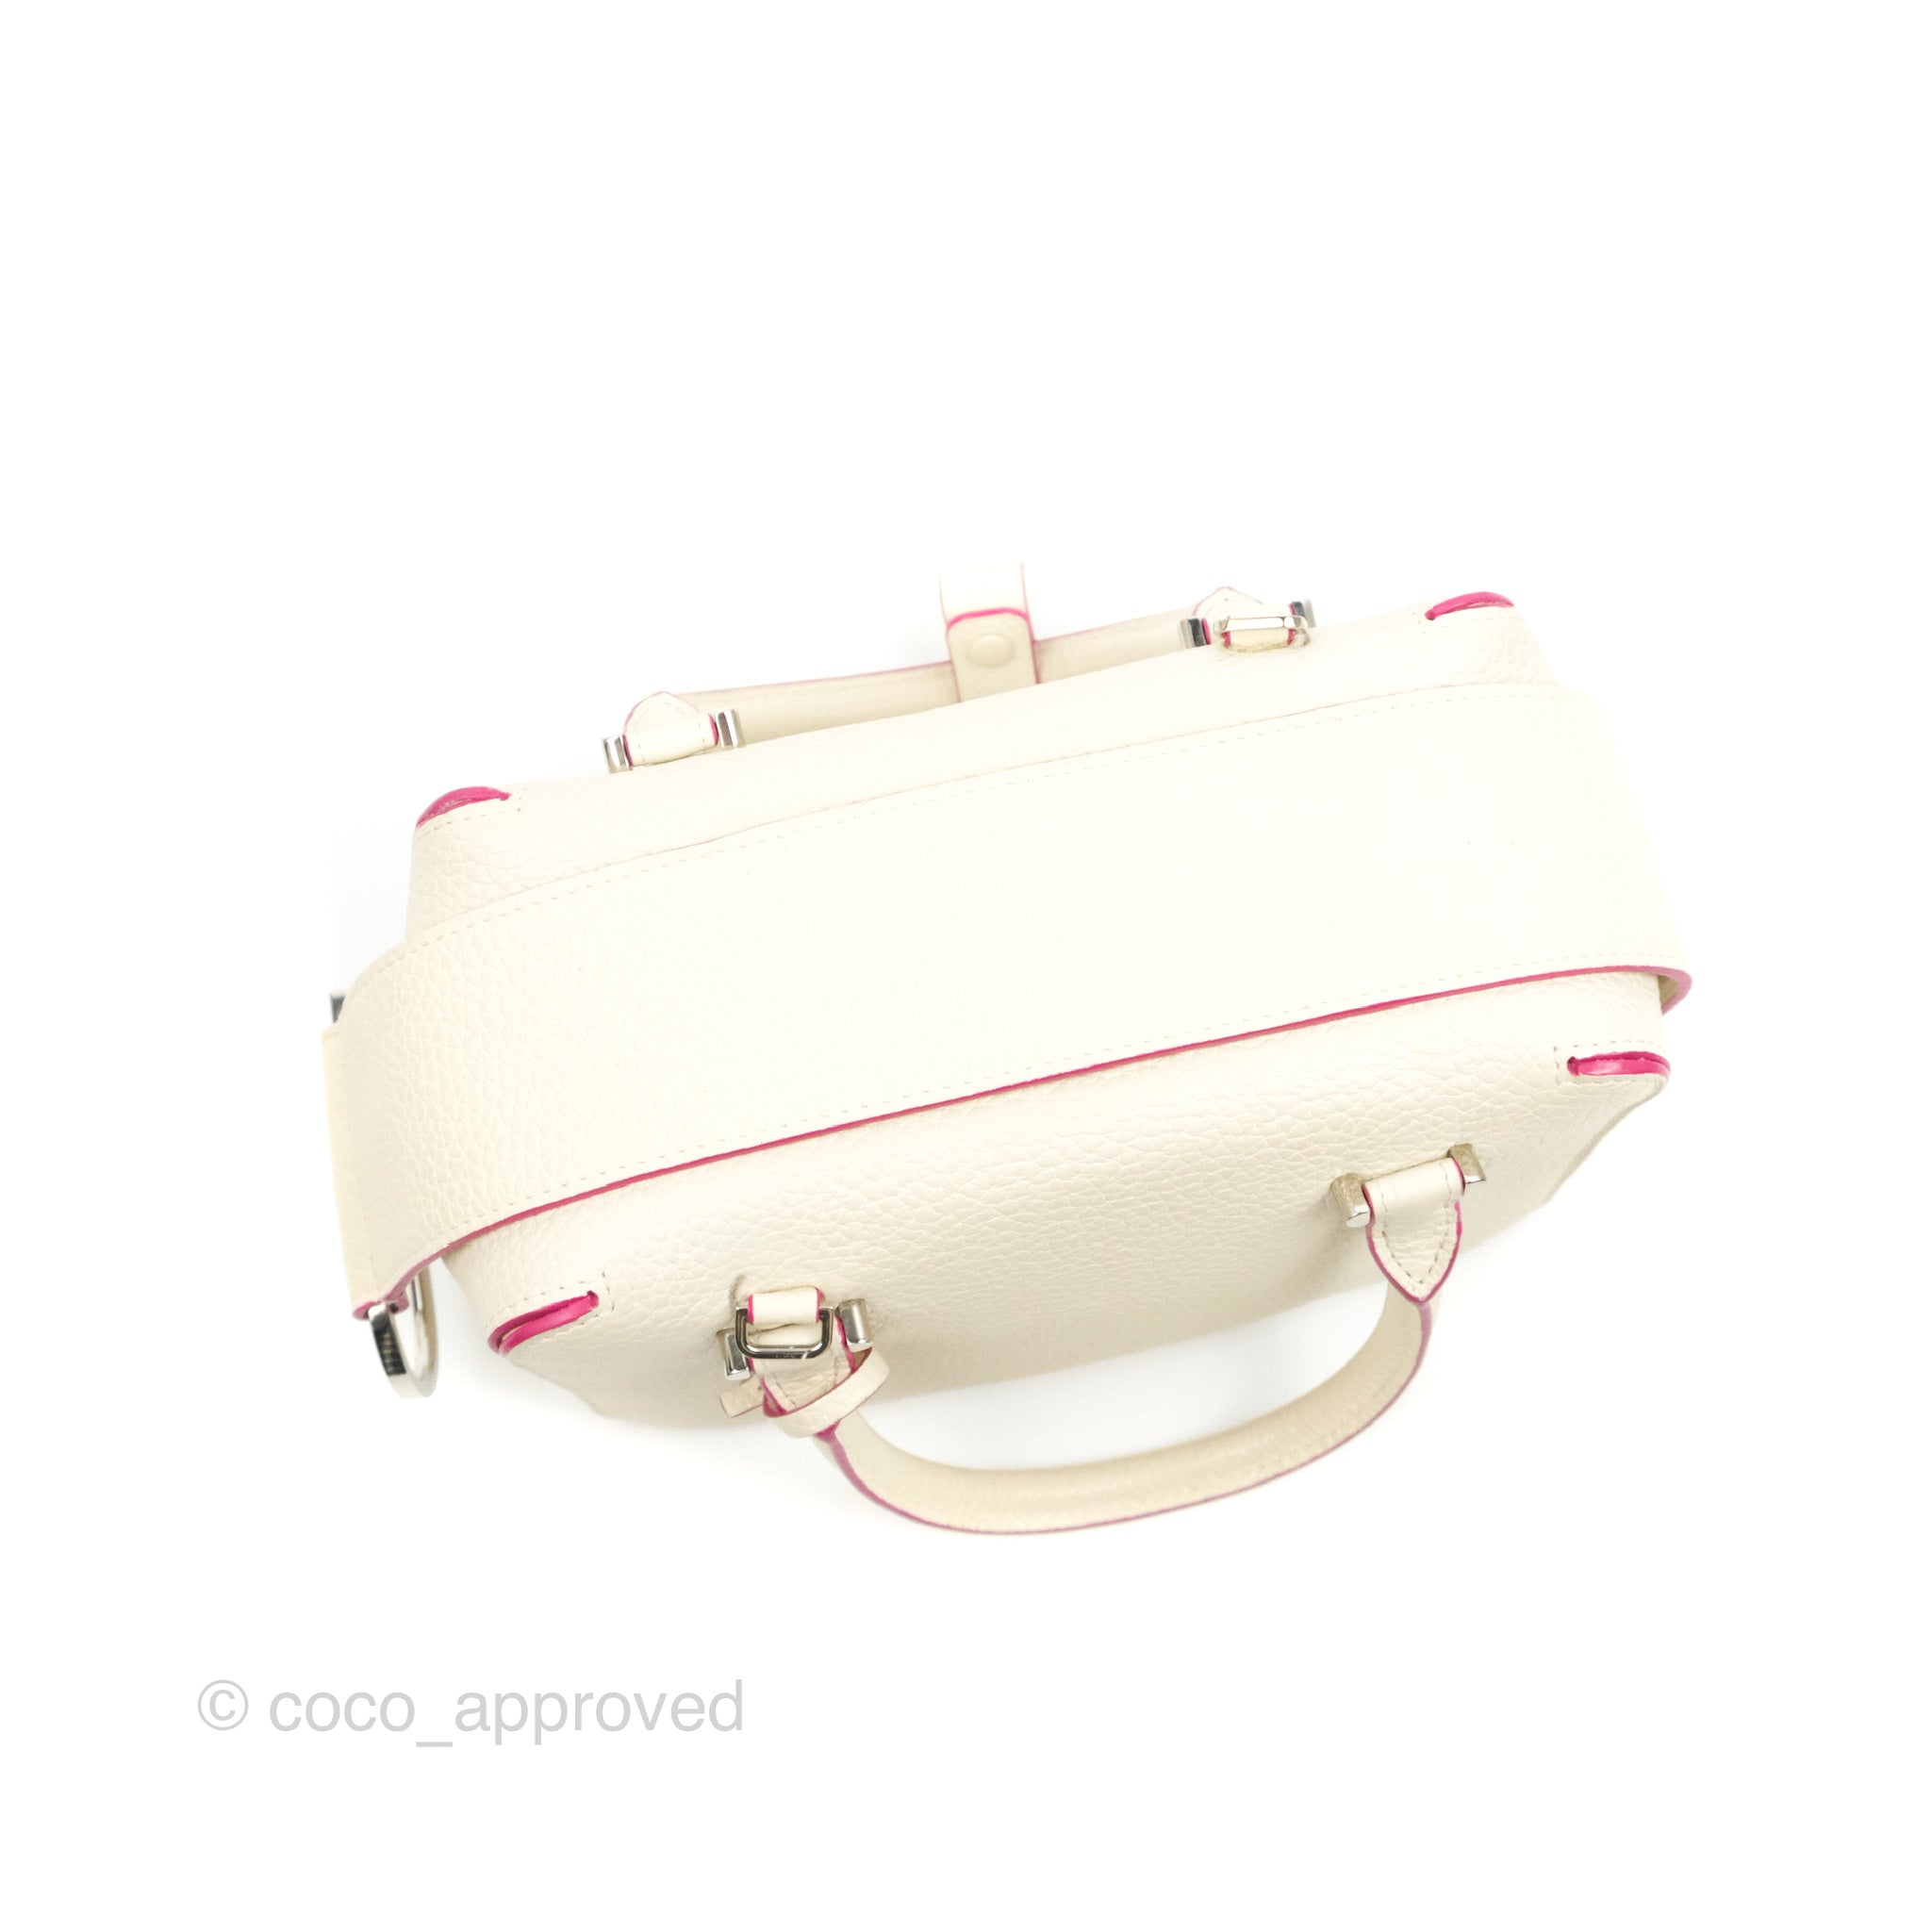 Delvaux cool box nano #delvaux : r/handbags